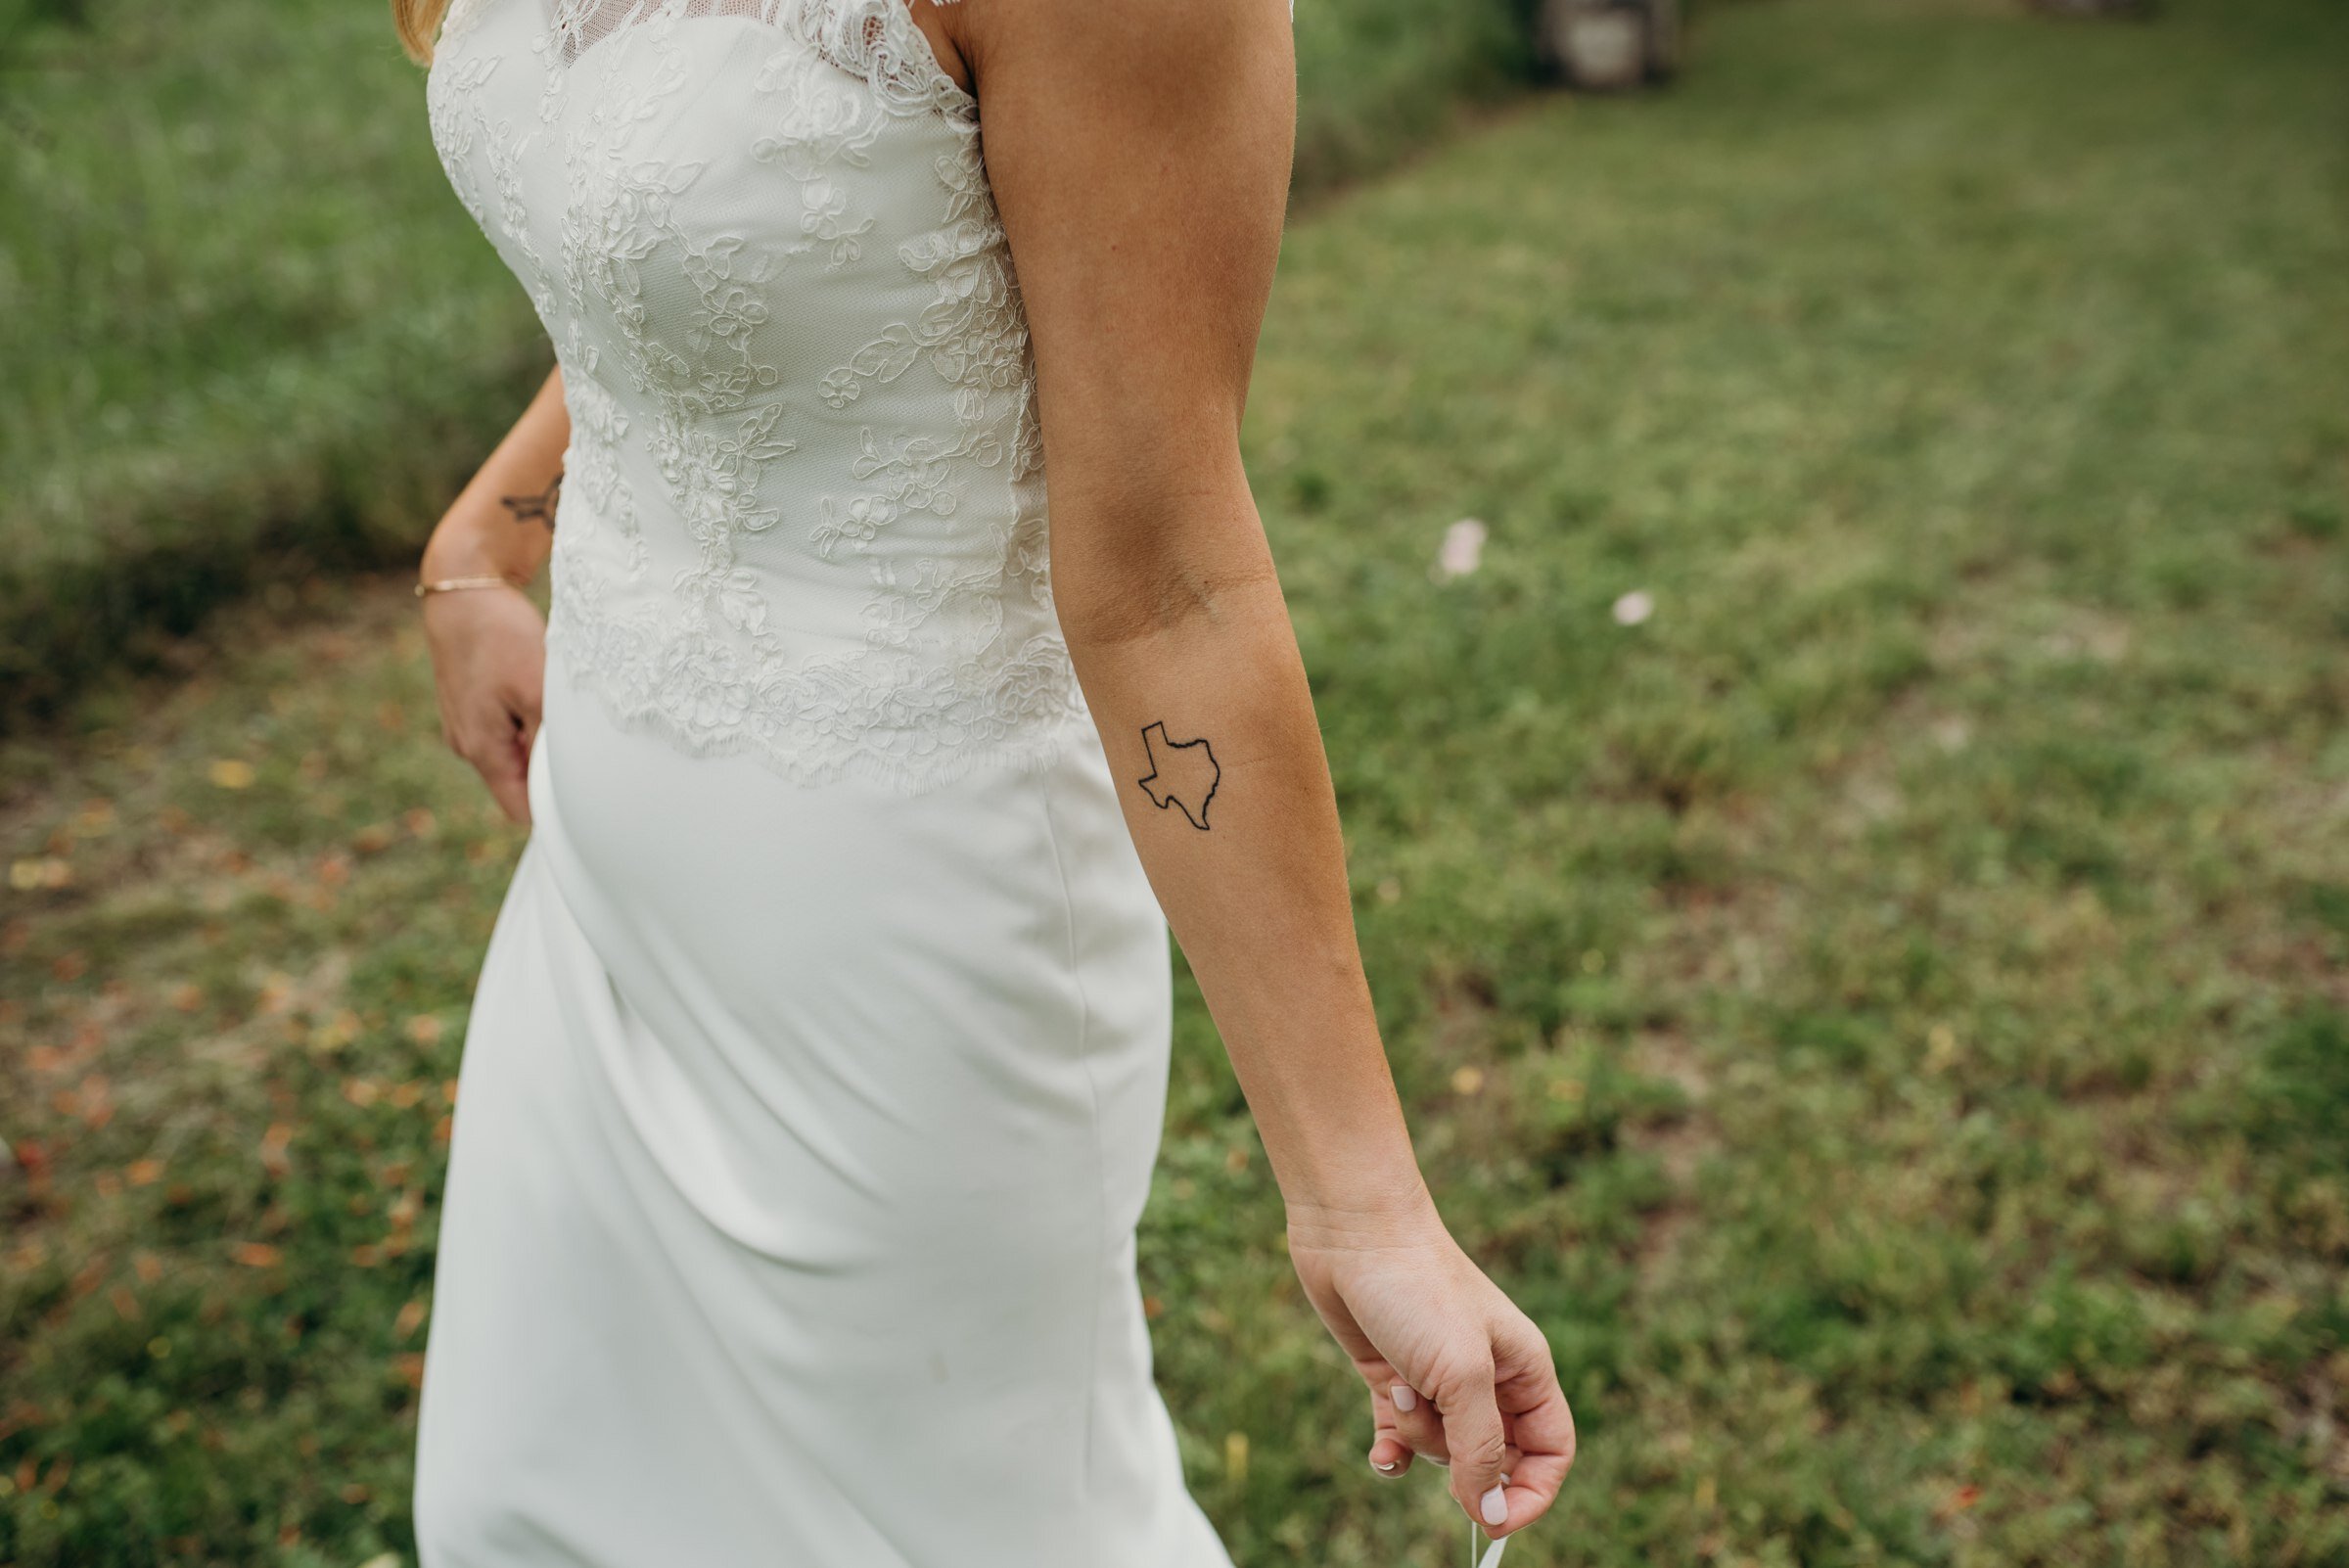  texas state tattoo on arm of bride plant at kyle wedding venue austin texas 